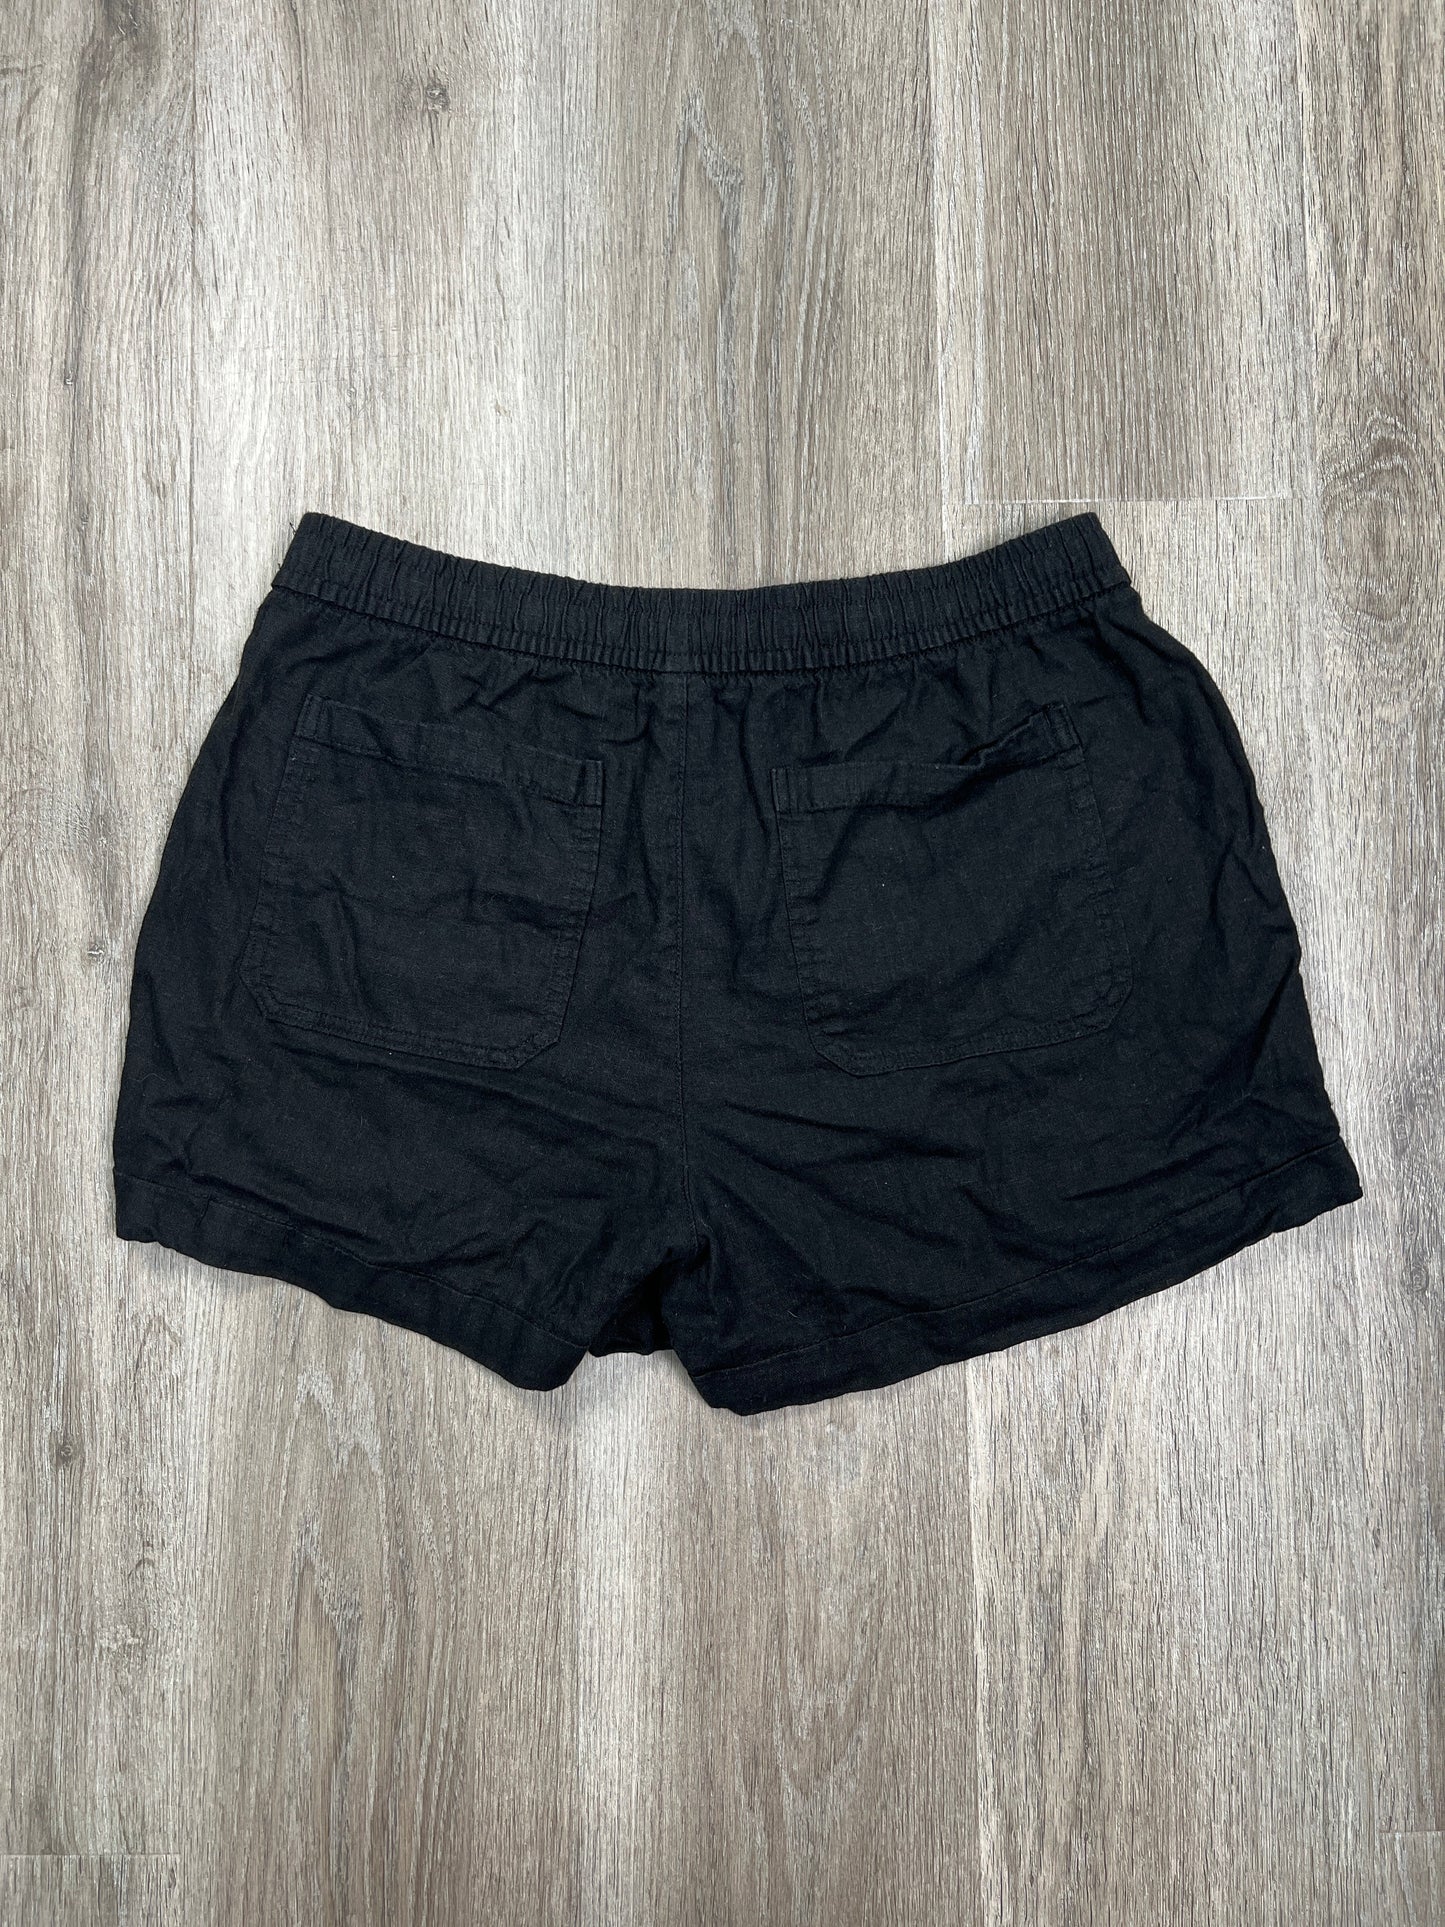 Black Shorts Old Navy, Size M